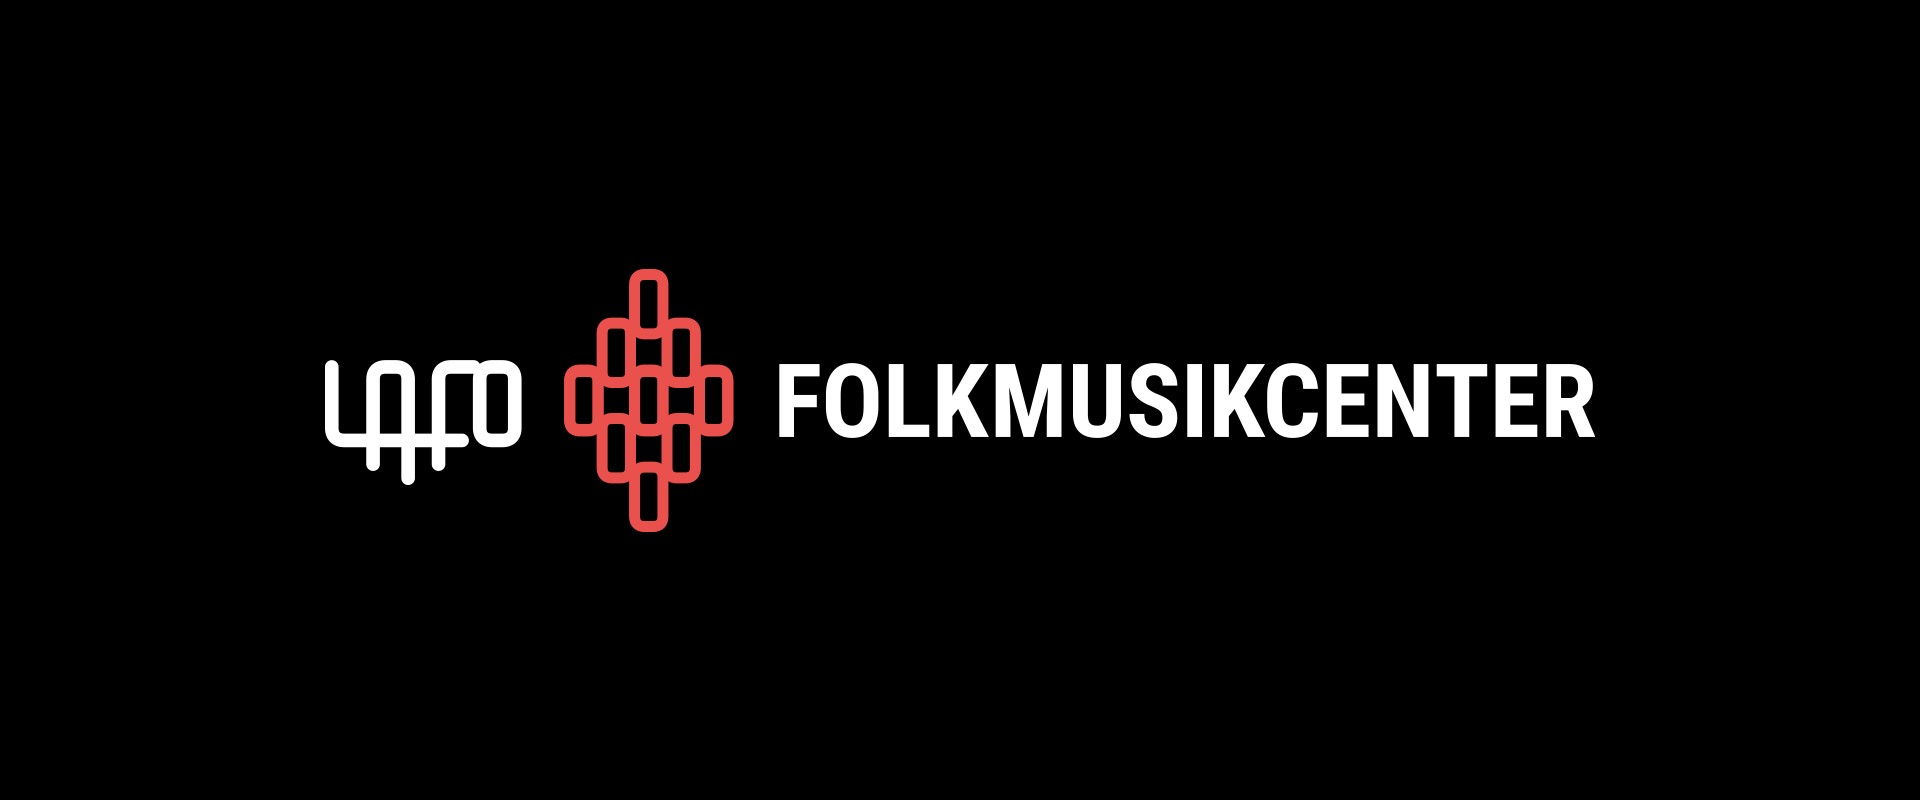 Folkmusik logo2